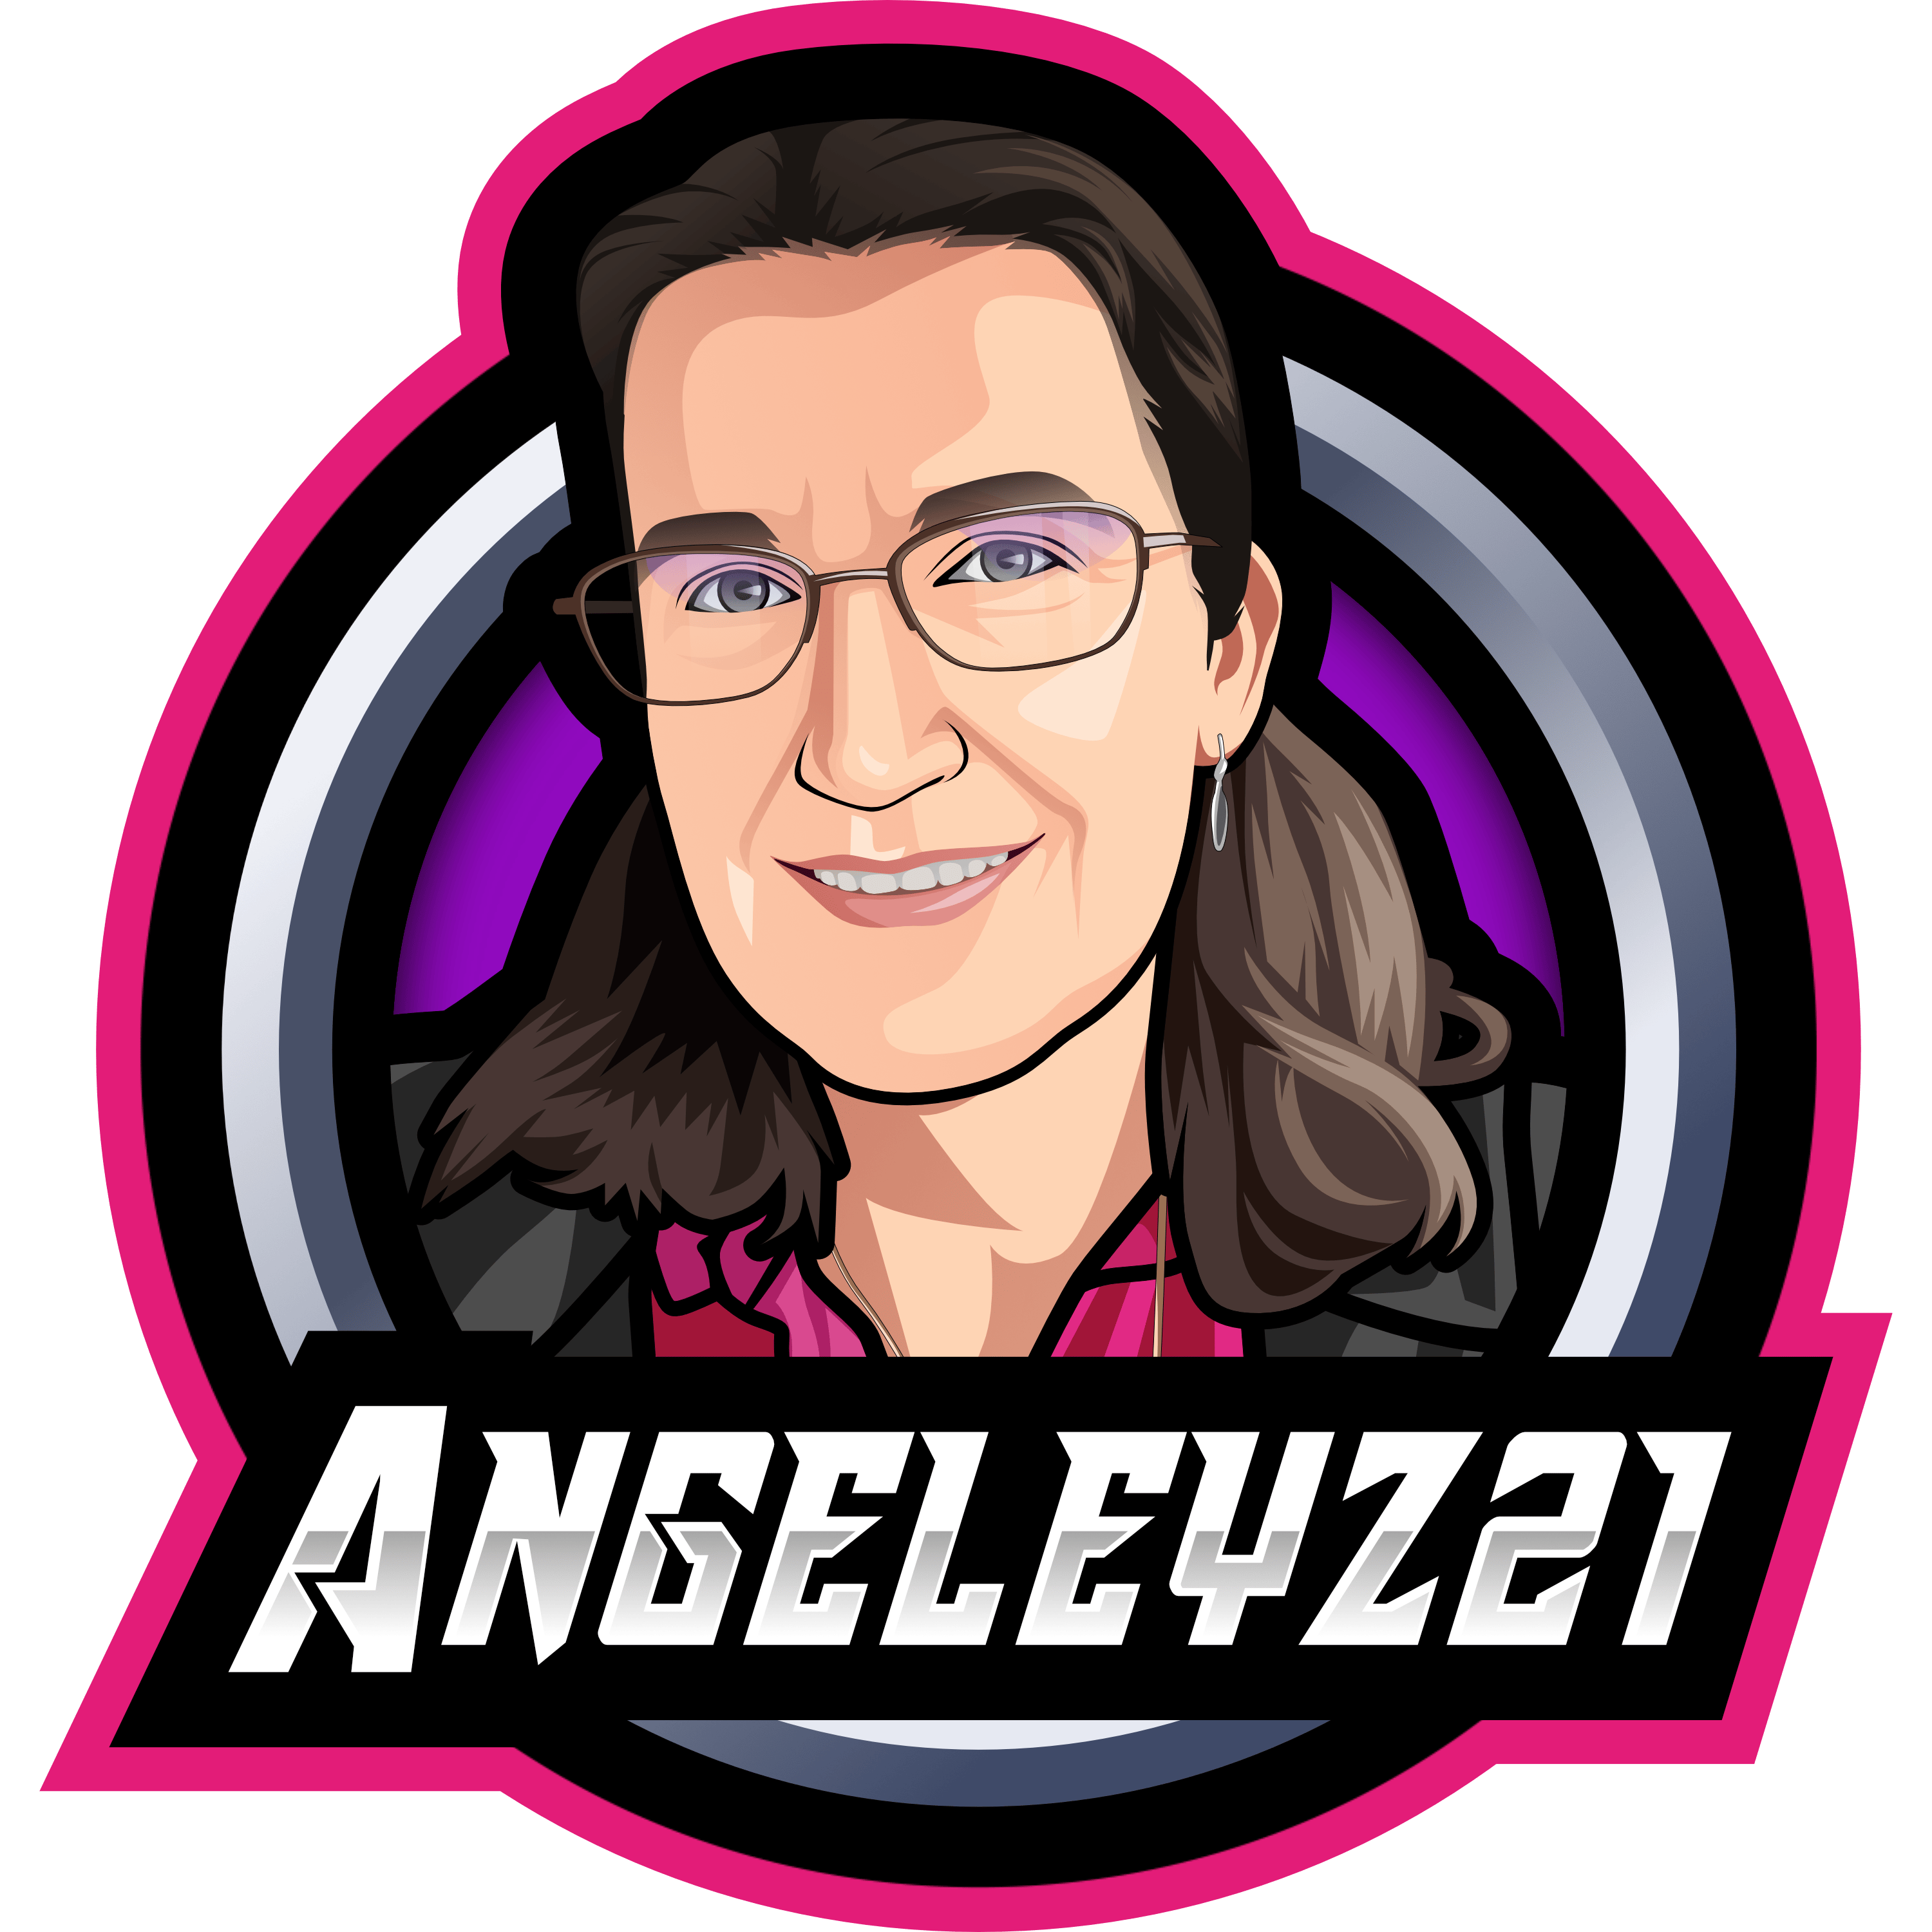 Profile picture of Angeleyz21